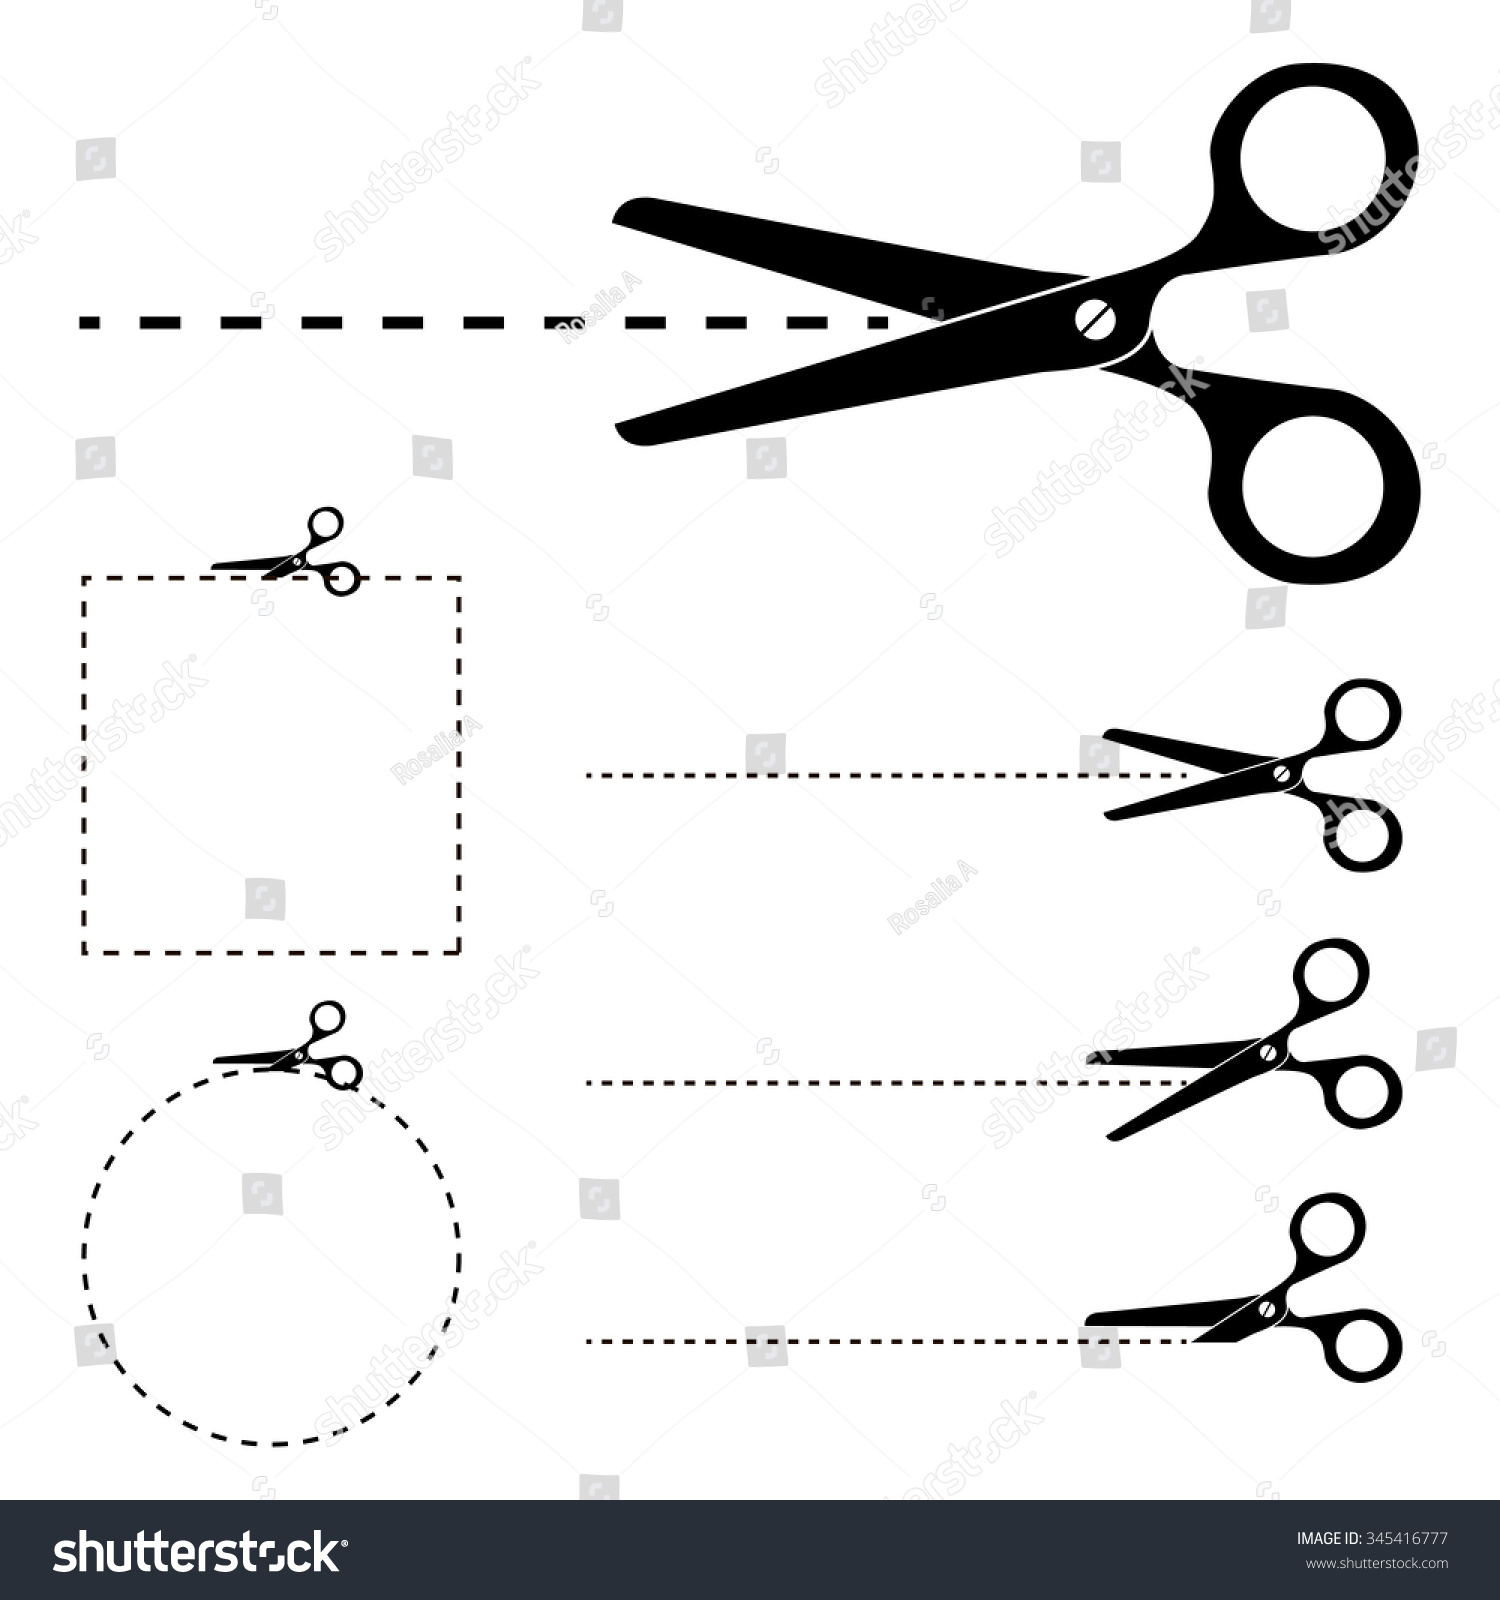 scissors clipart in word - photo #50